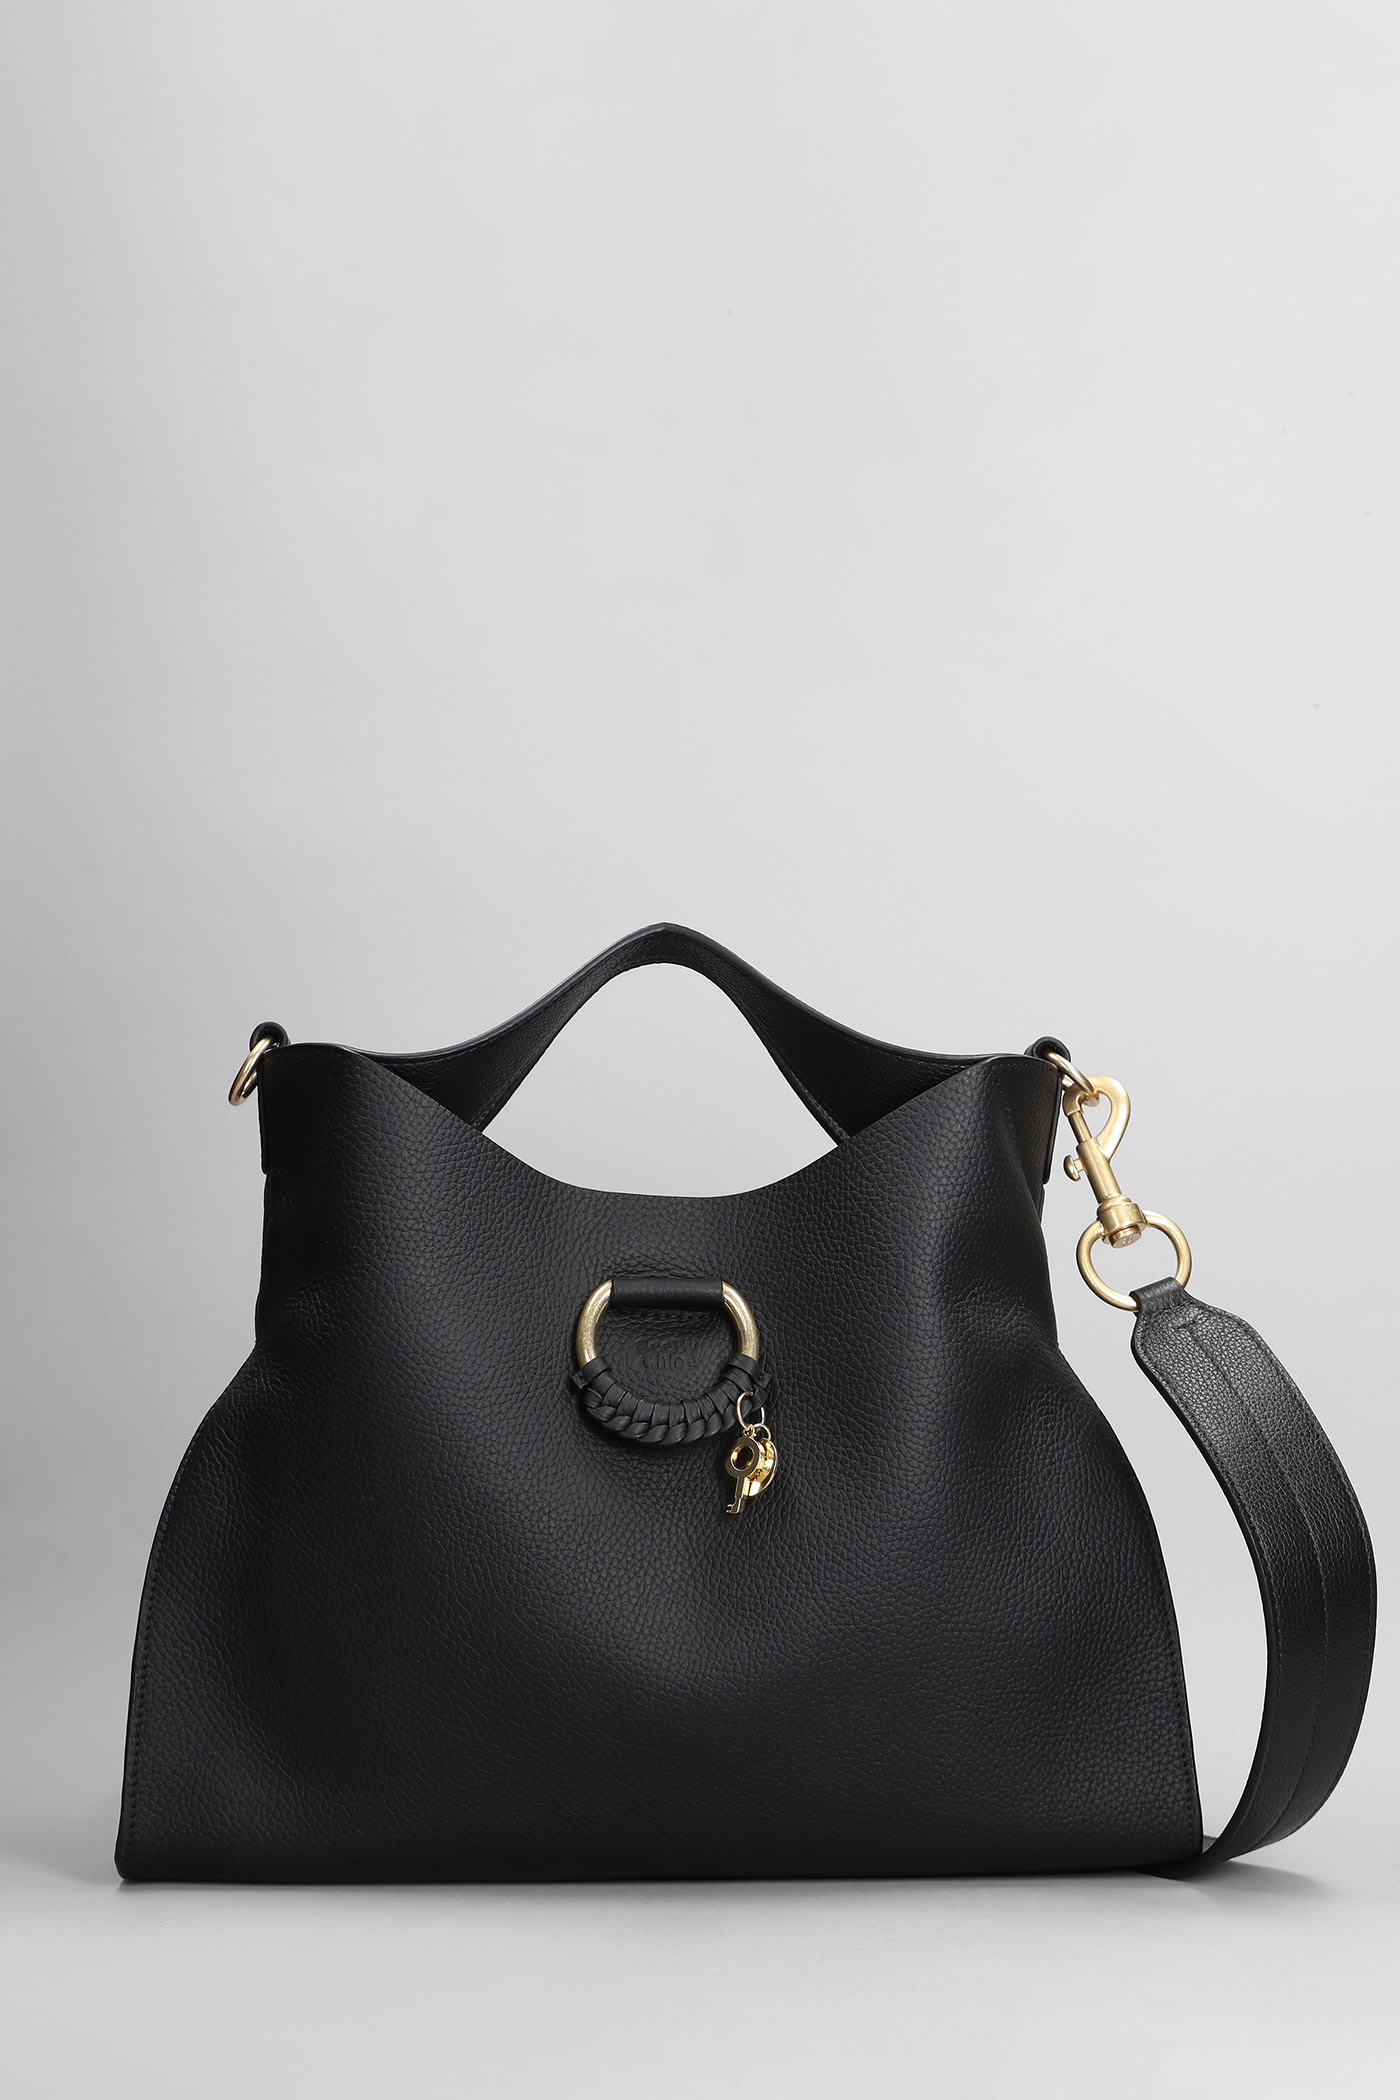 See by Chloé Joan Shoulder Bag In Black Leather